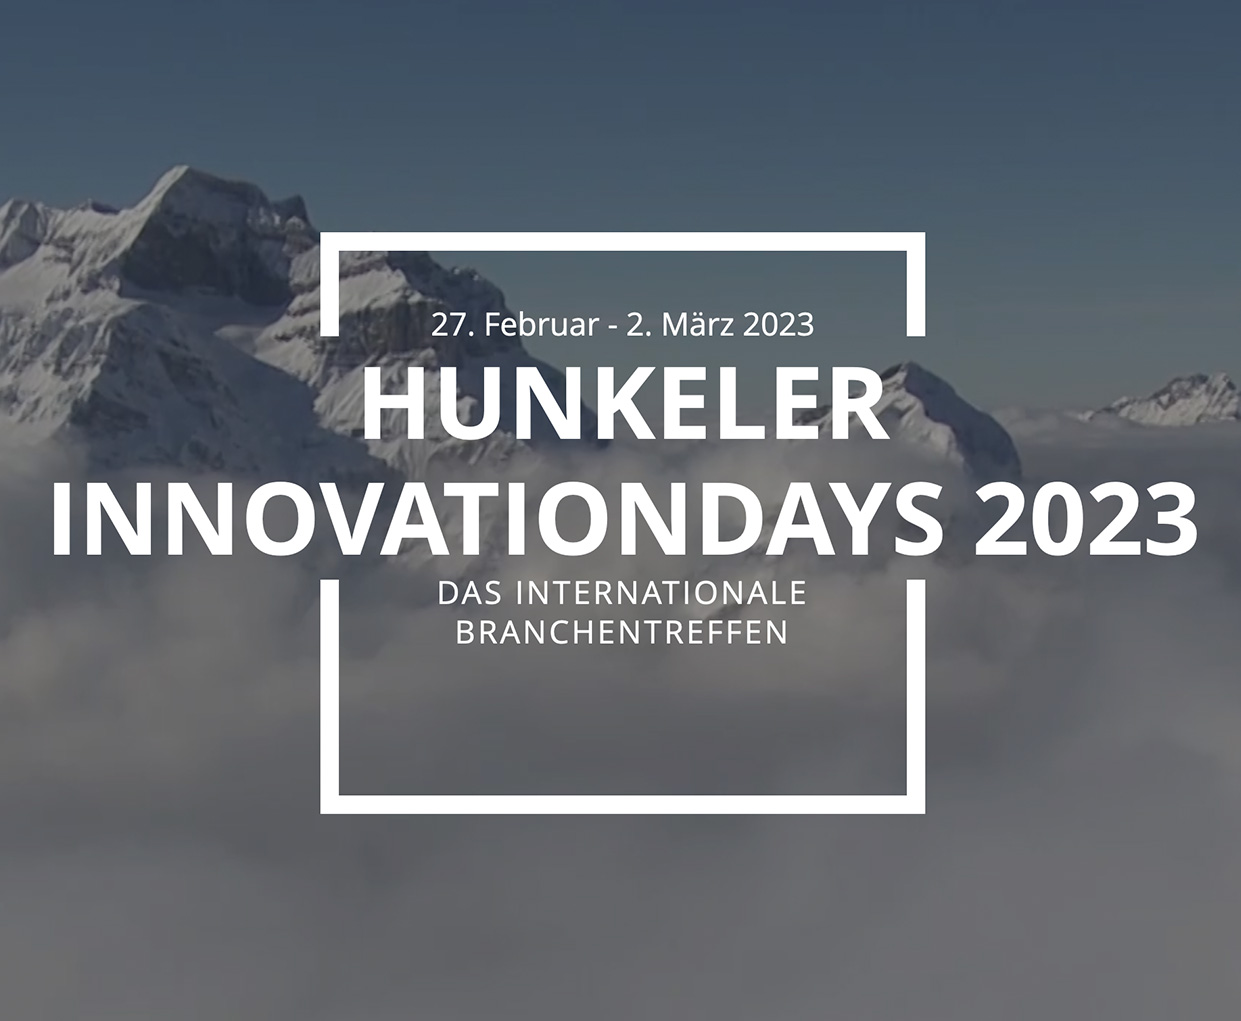 Hunkeler InnovationDays